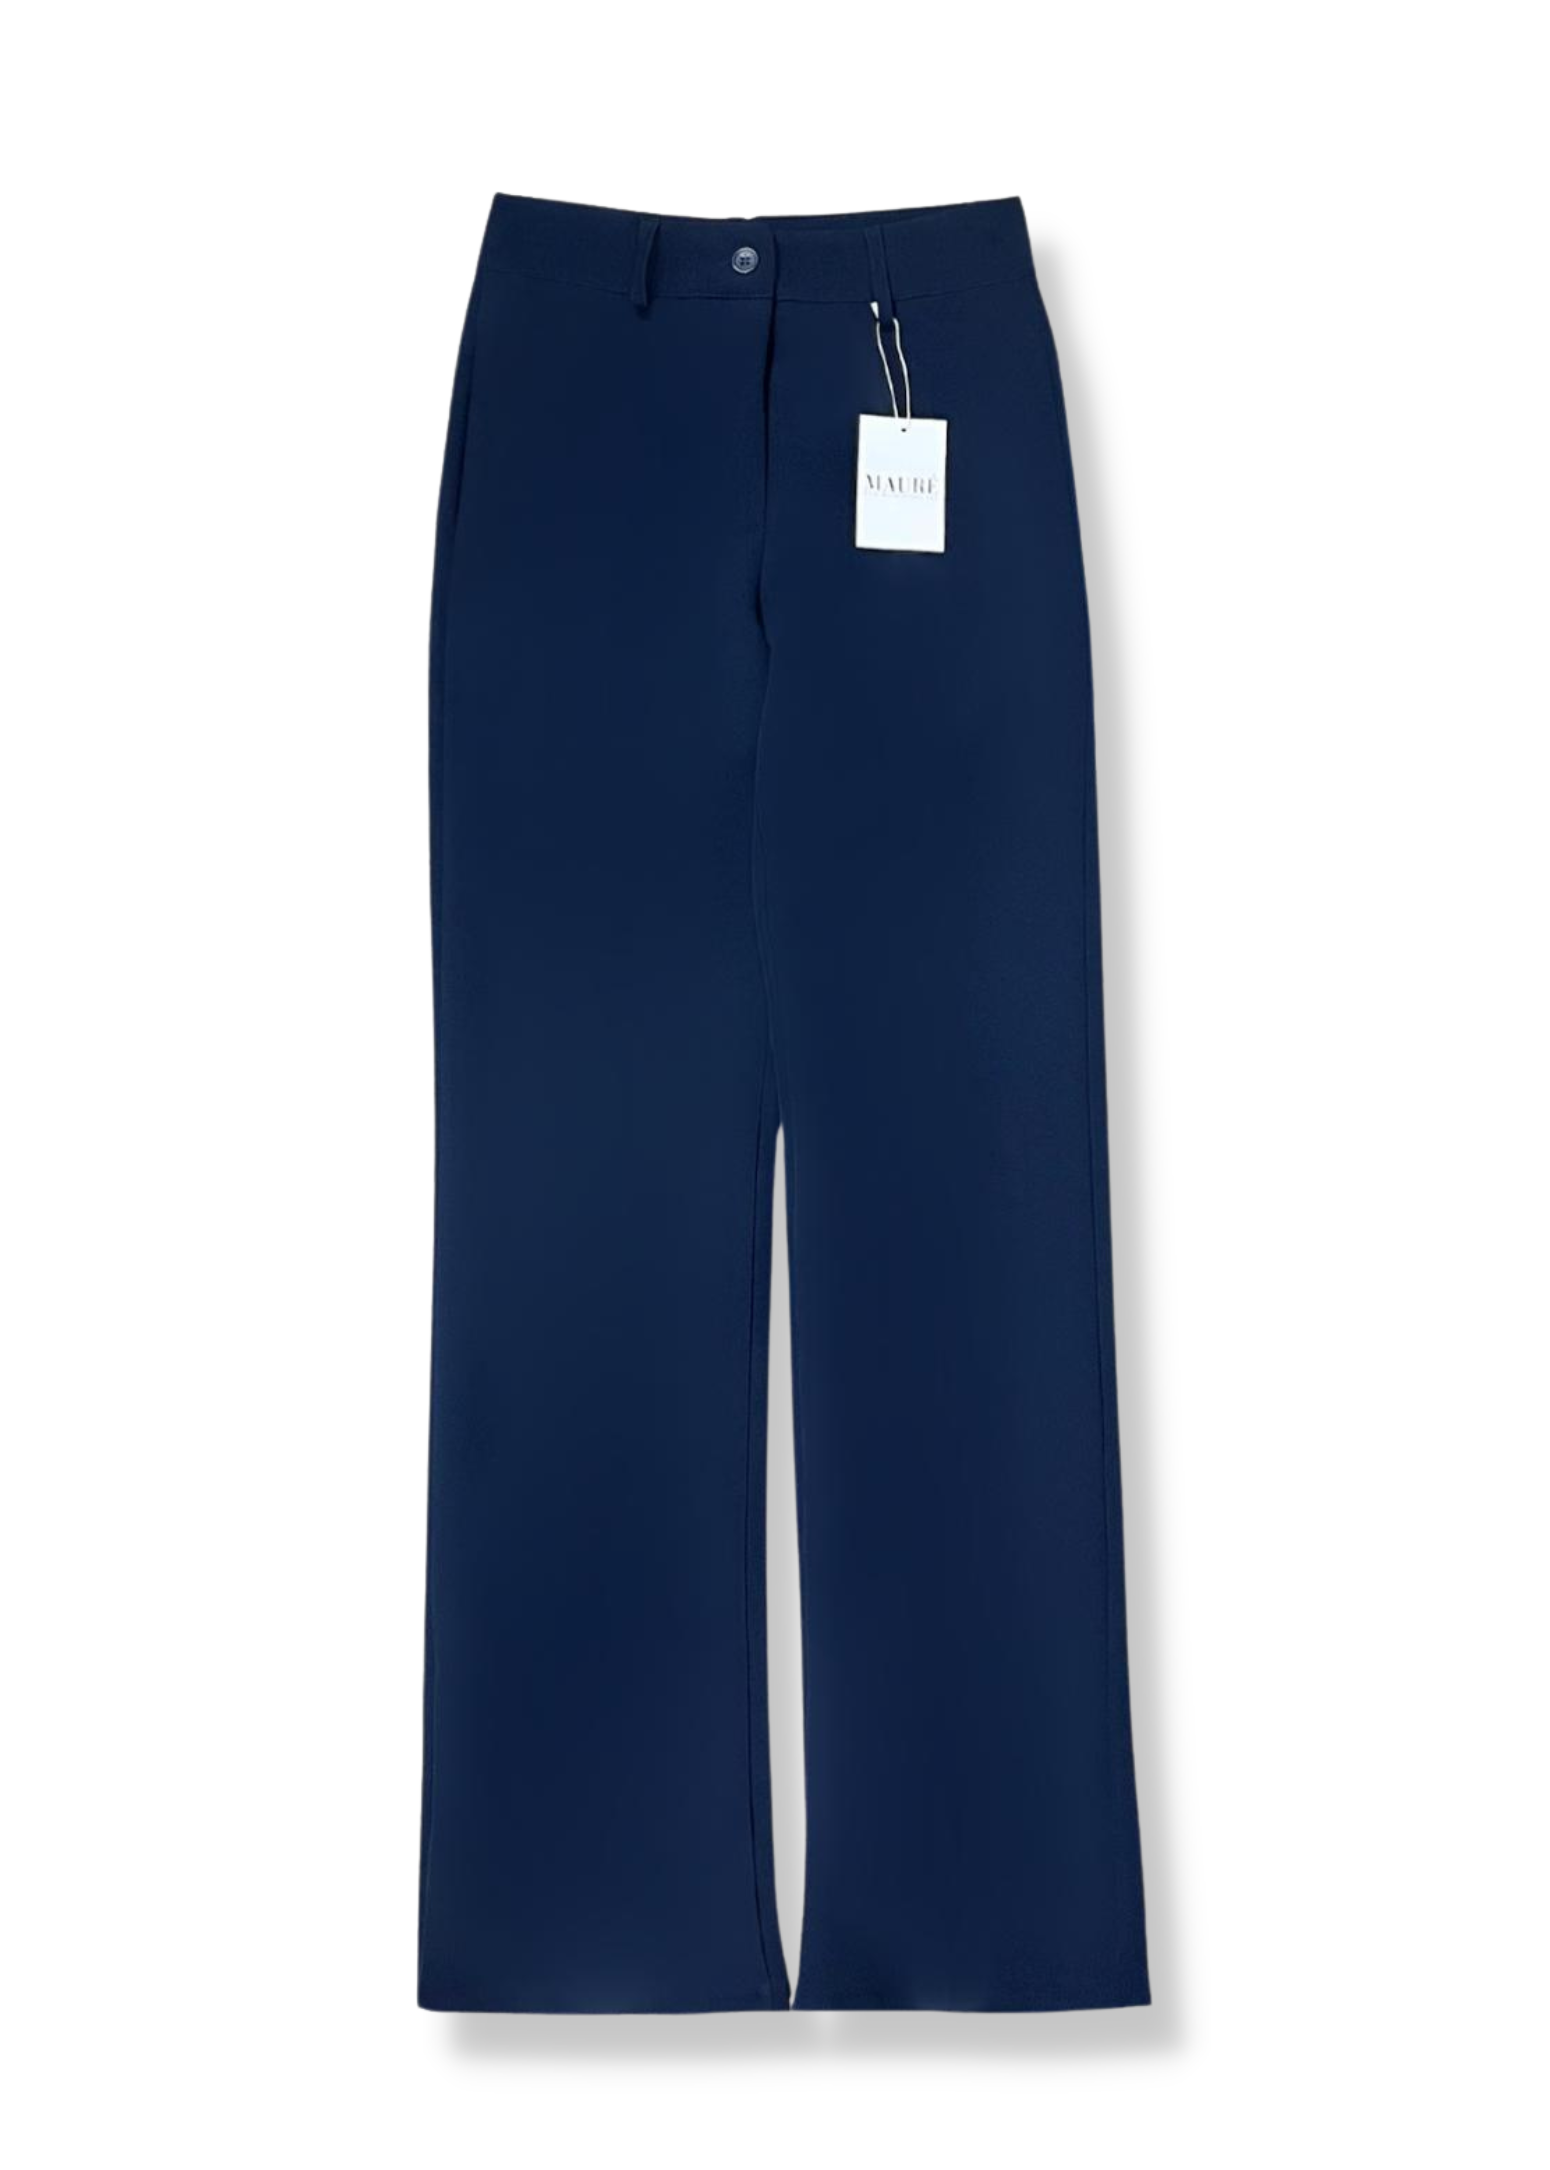 Pantalon droit classic night blue (TALL)